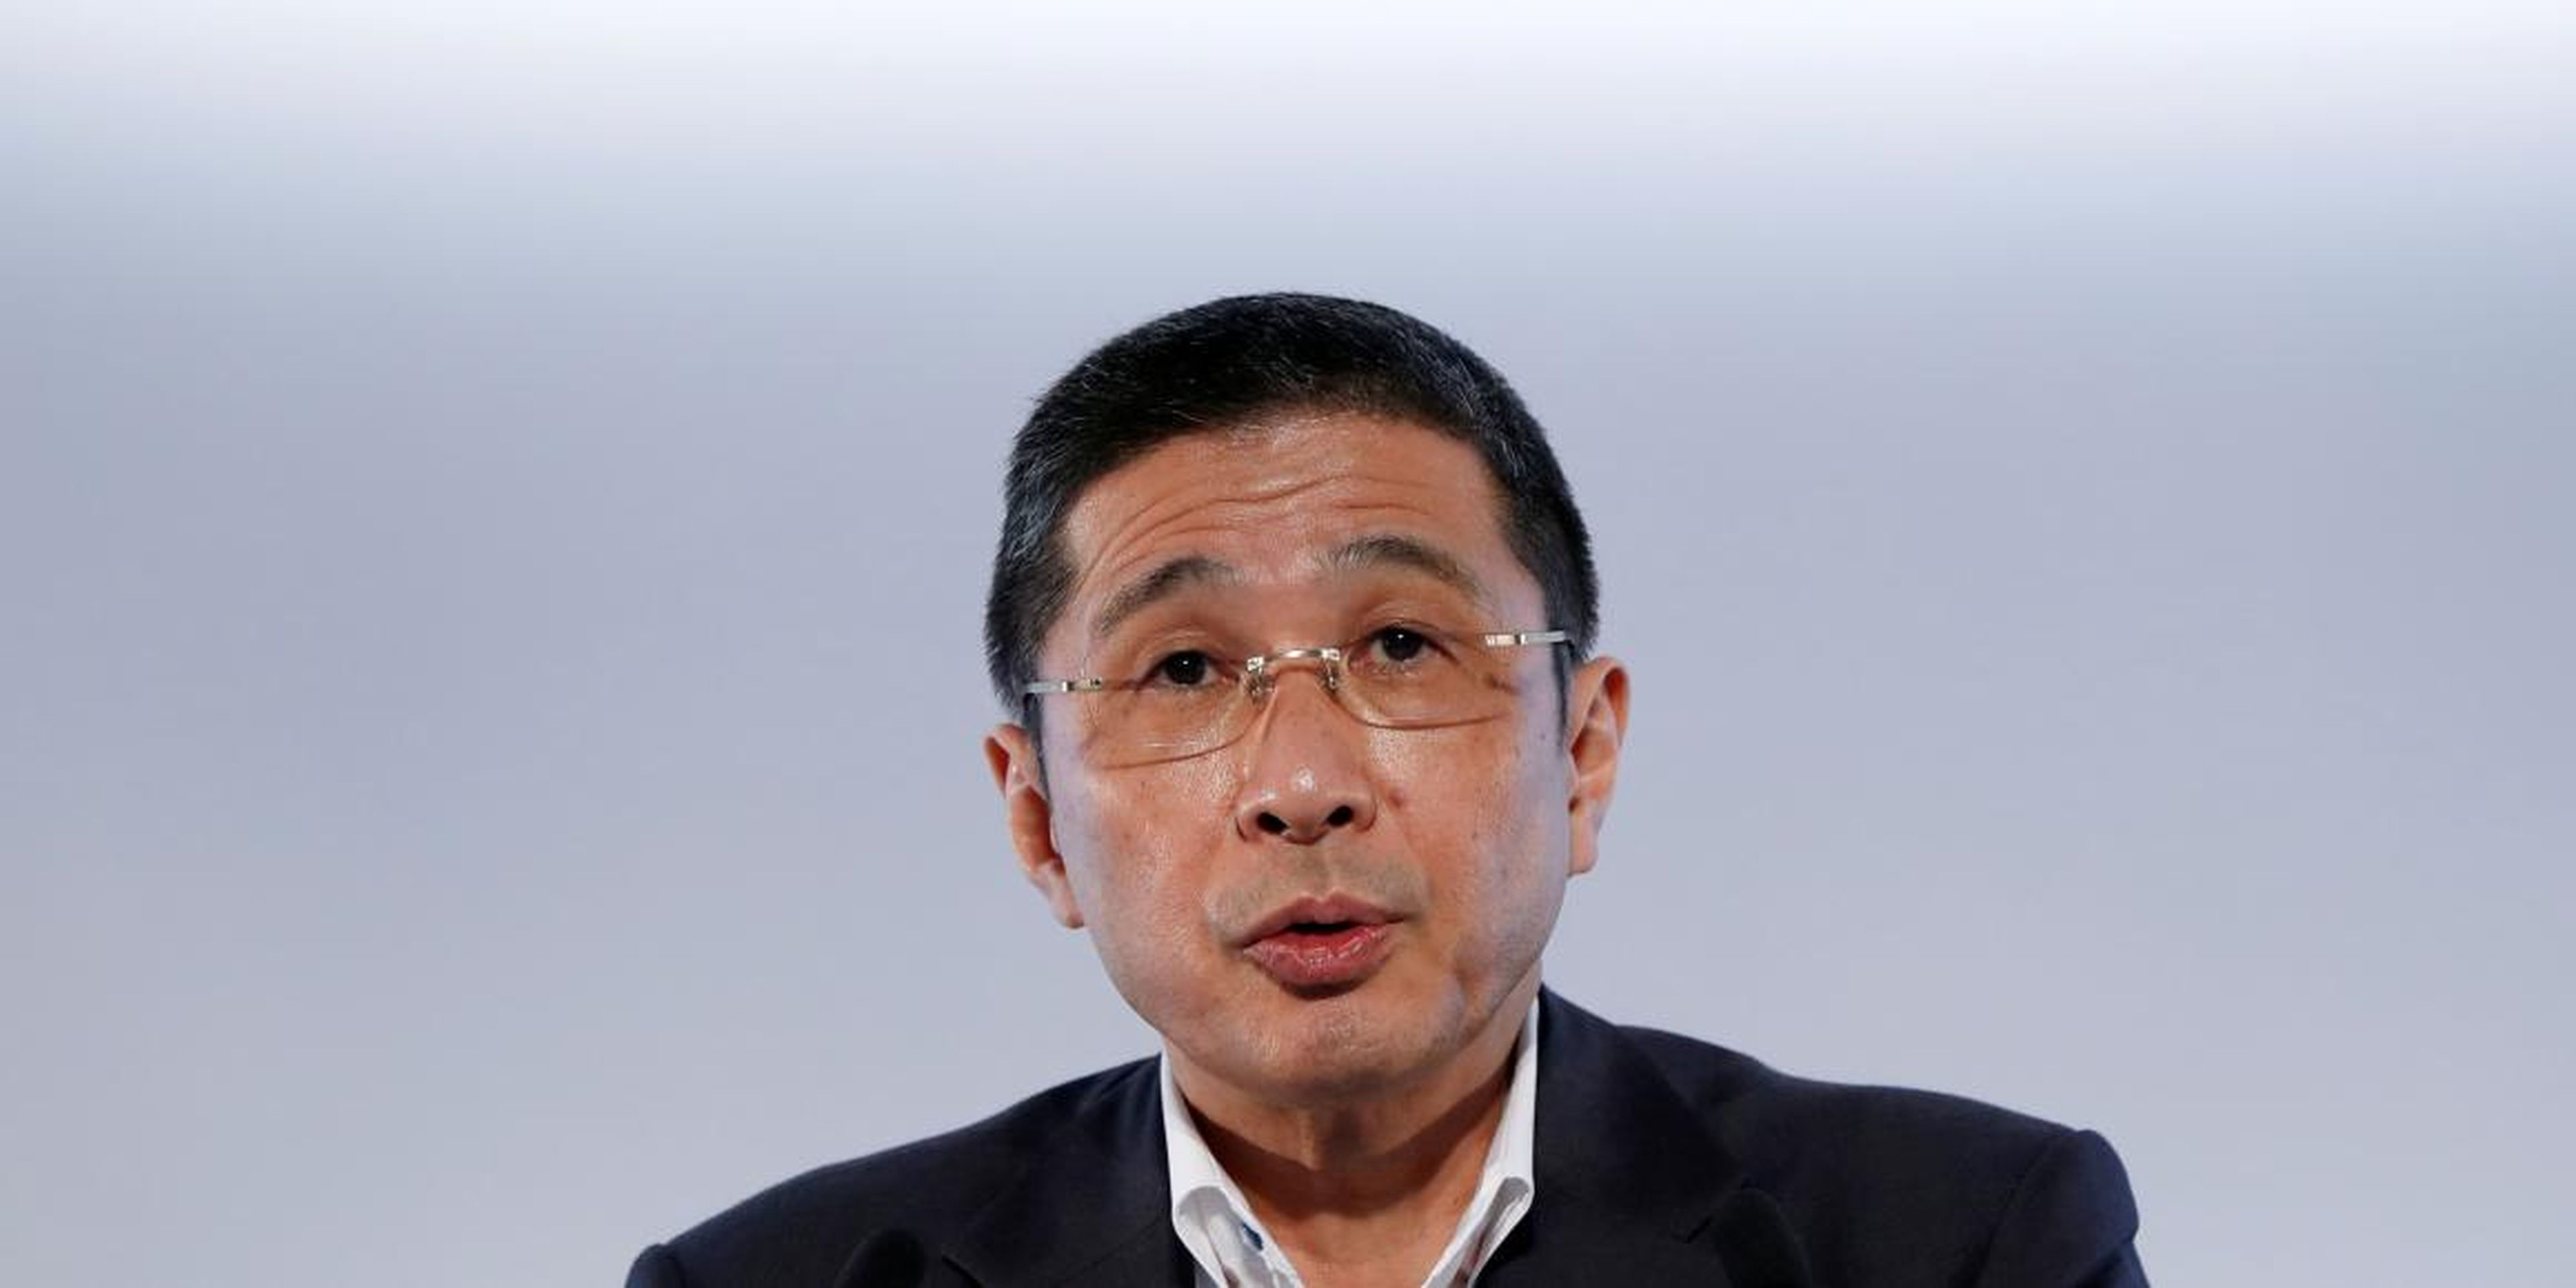 FILE PHOTO - Nissan CEO Hiroto Saikawa attends a news conference in Yokohama